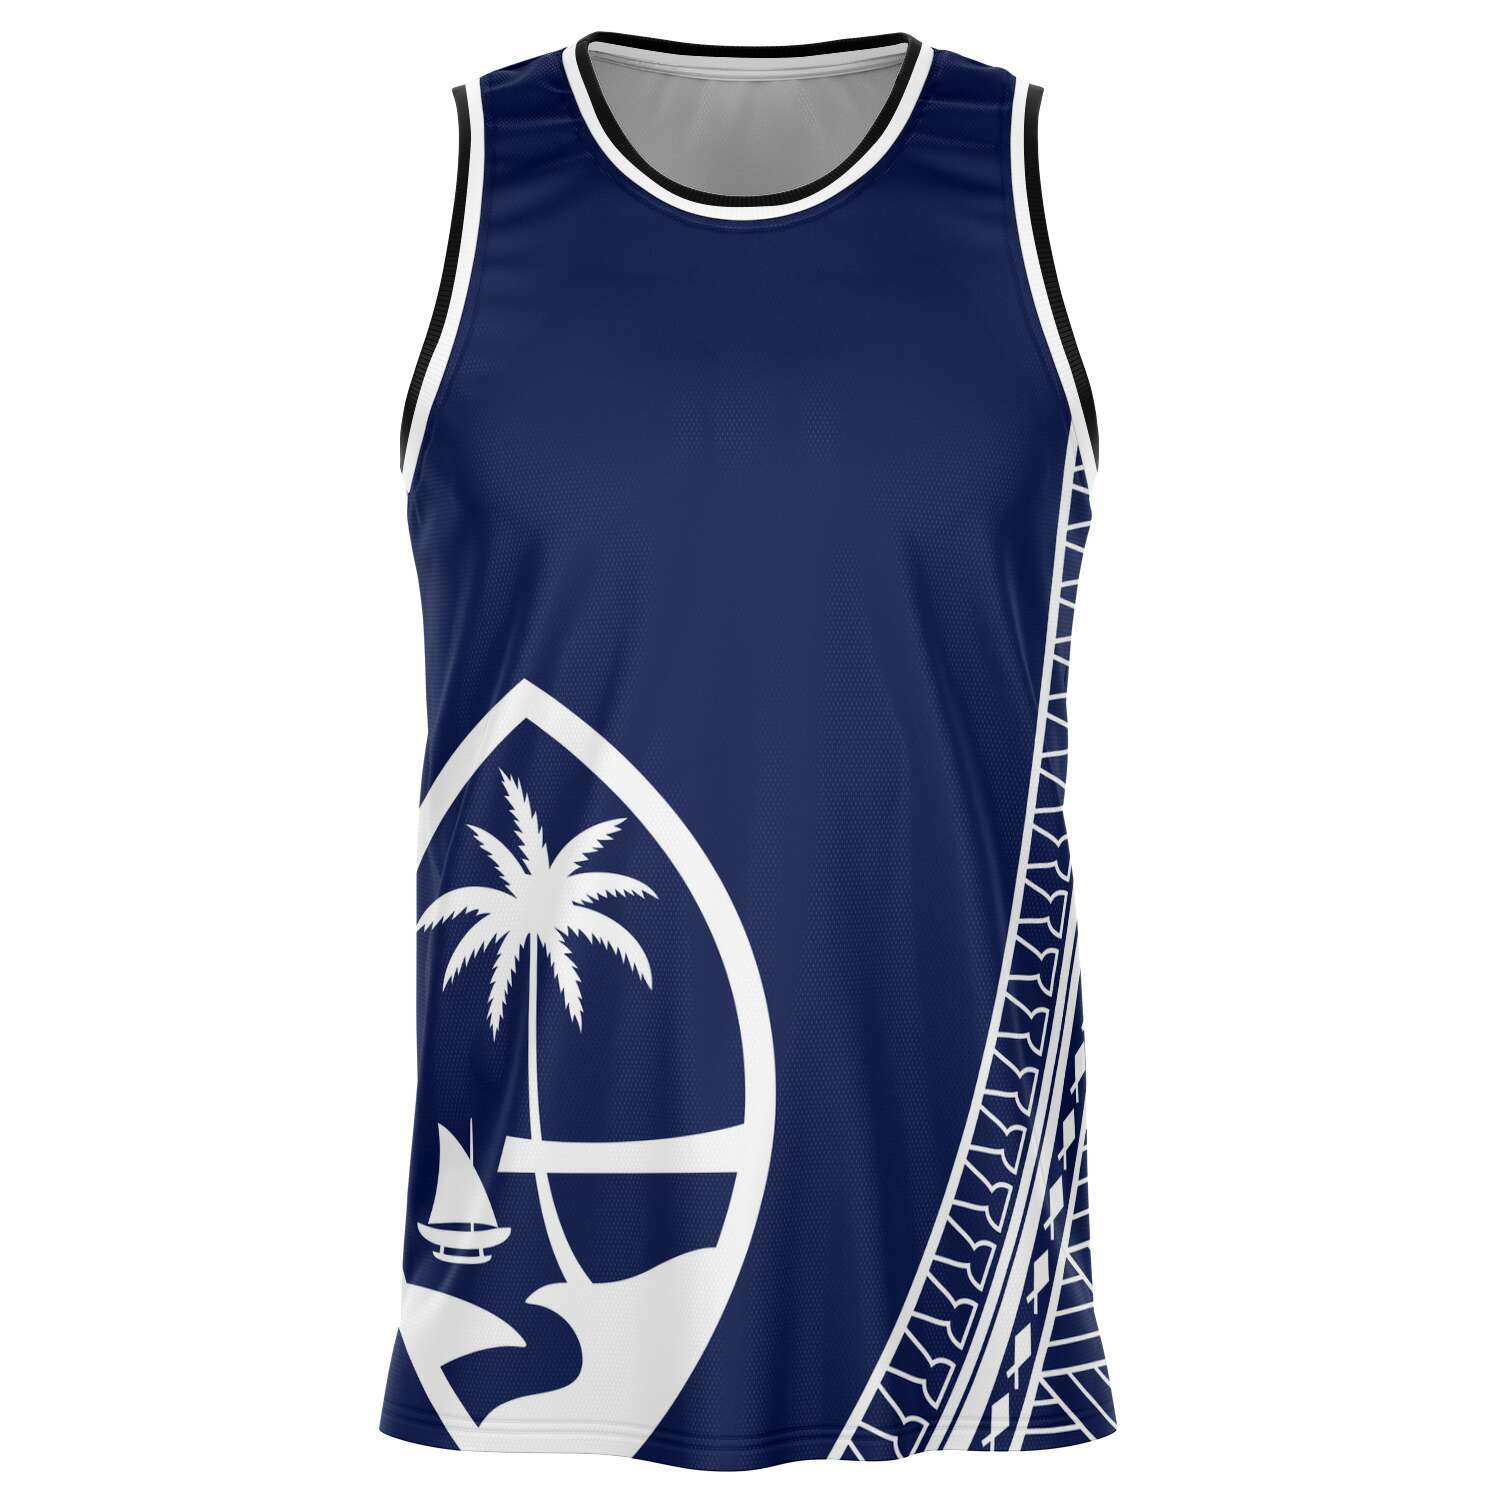 Polynesian Tribal Guam Totem Tattoo Prints Mesh Performance Athletic  Basketball Jerseys Team Uniforms for Sports Scrimmage Mans